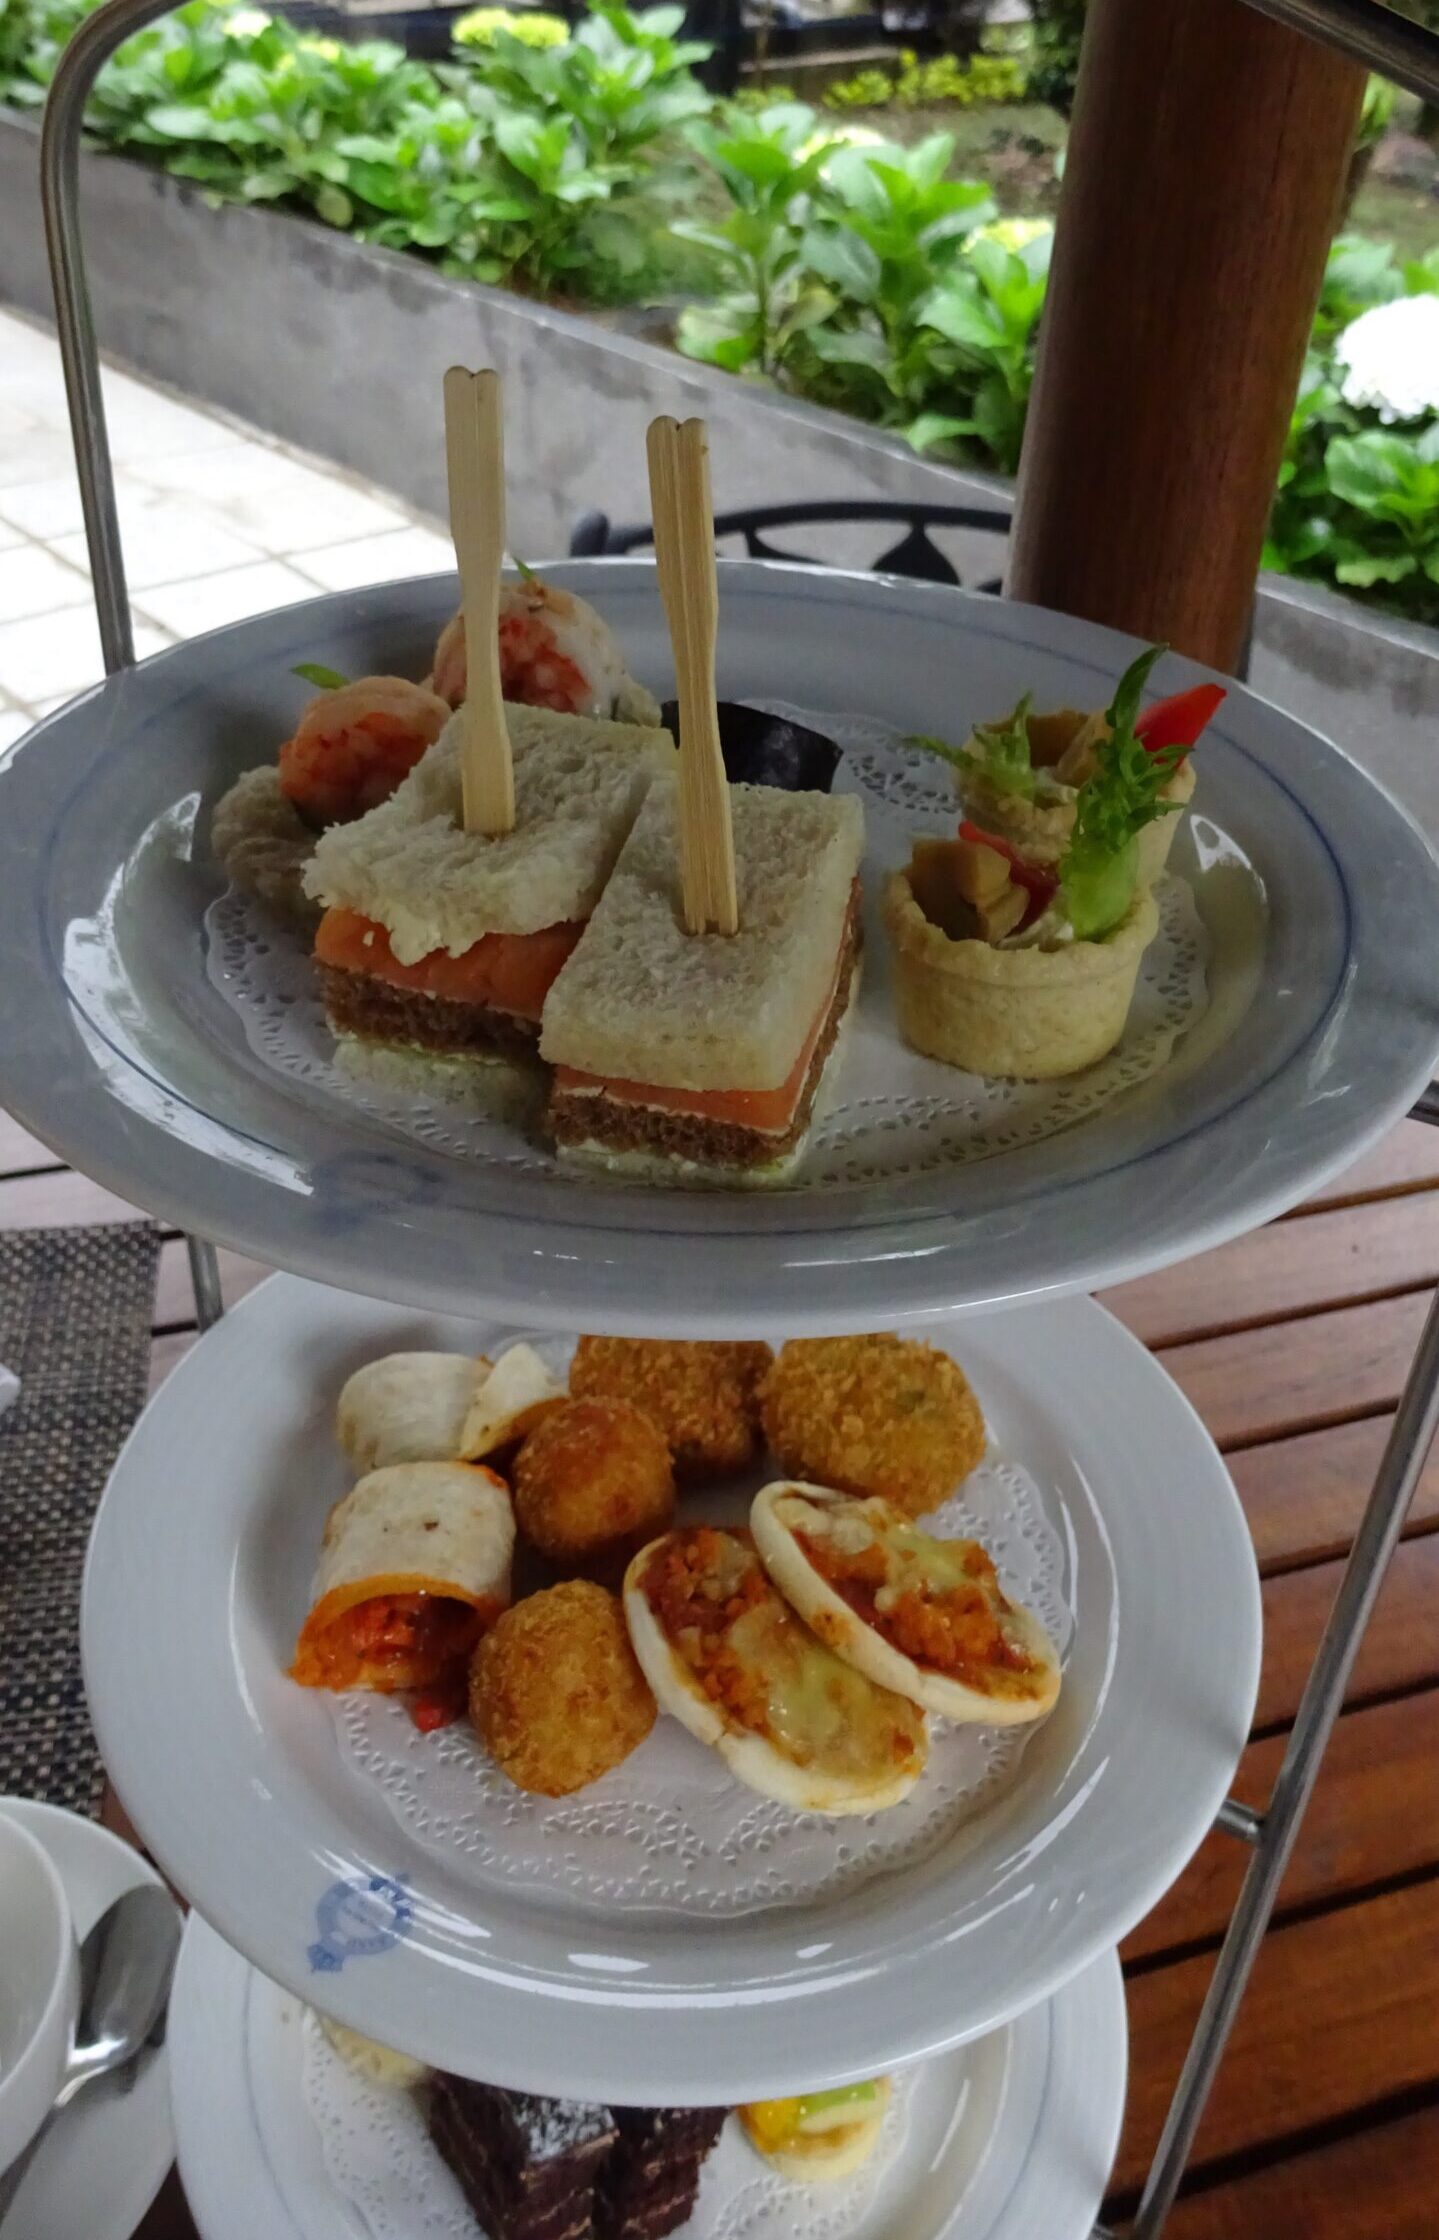 High tea 3 tiered stand with sandwiches and cake at The Grand Hotel, Nuwara Eliya, Sri Lanka